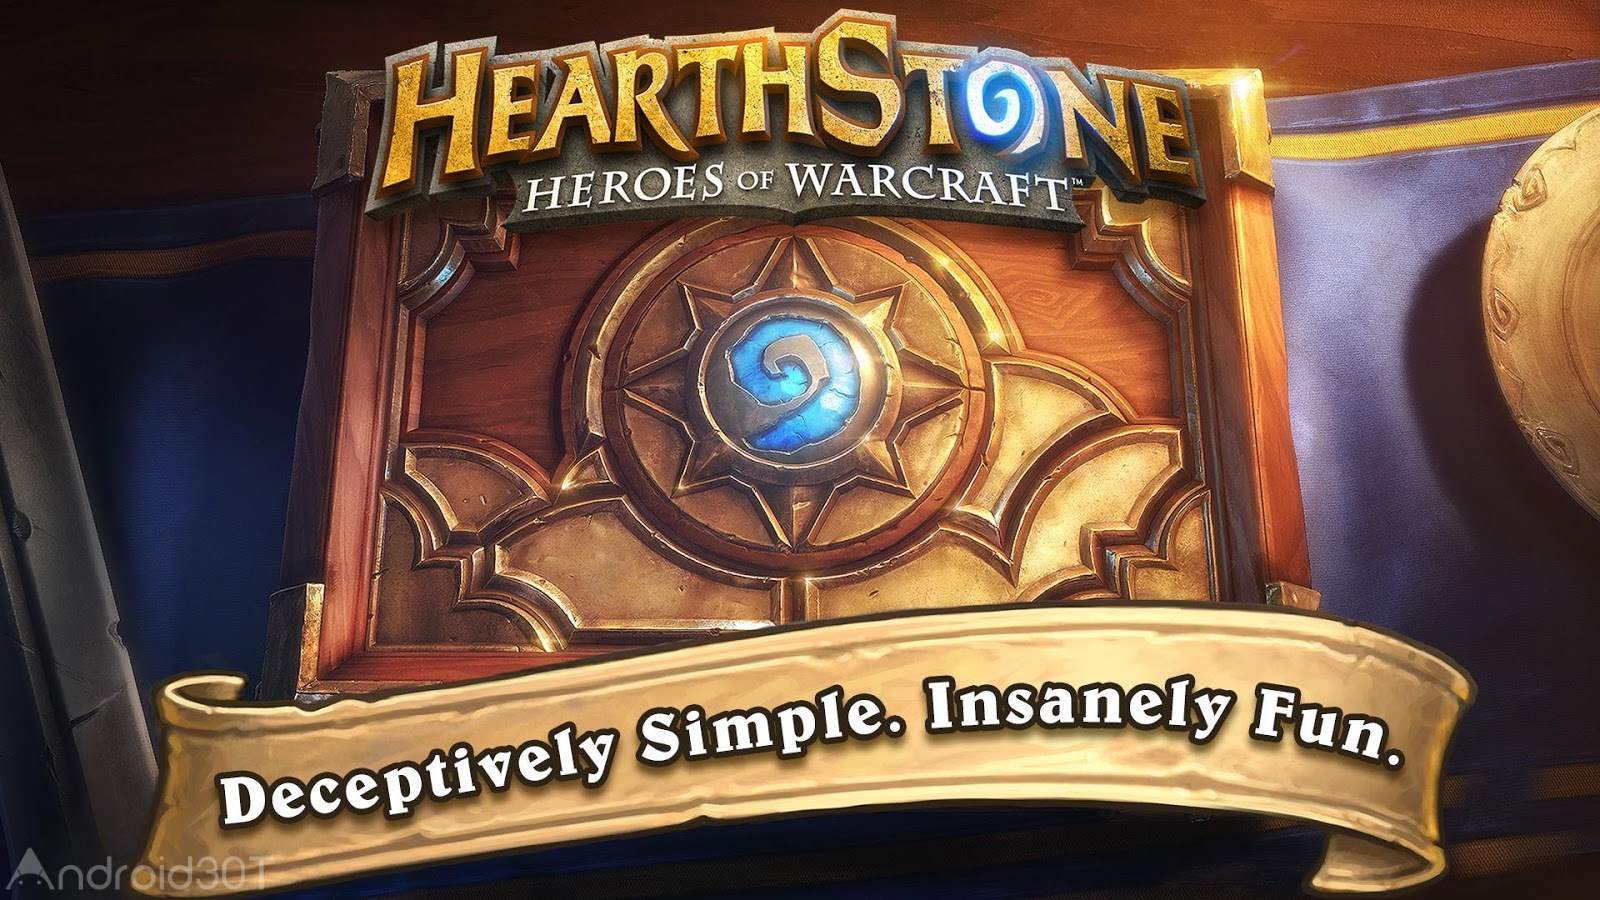 دانلود Hearthstone Heroes of Warcraft 23.6.142295 – بازی کارتی قهرمانان وارکرافت اندروید